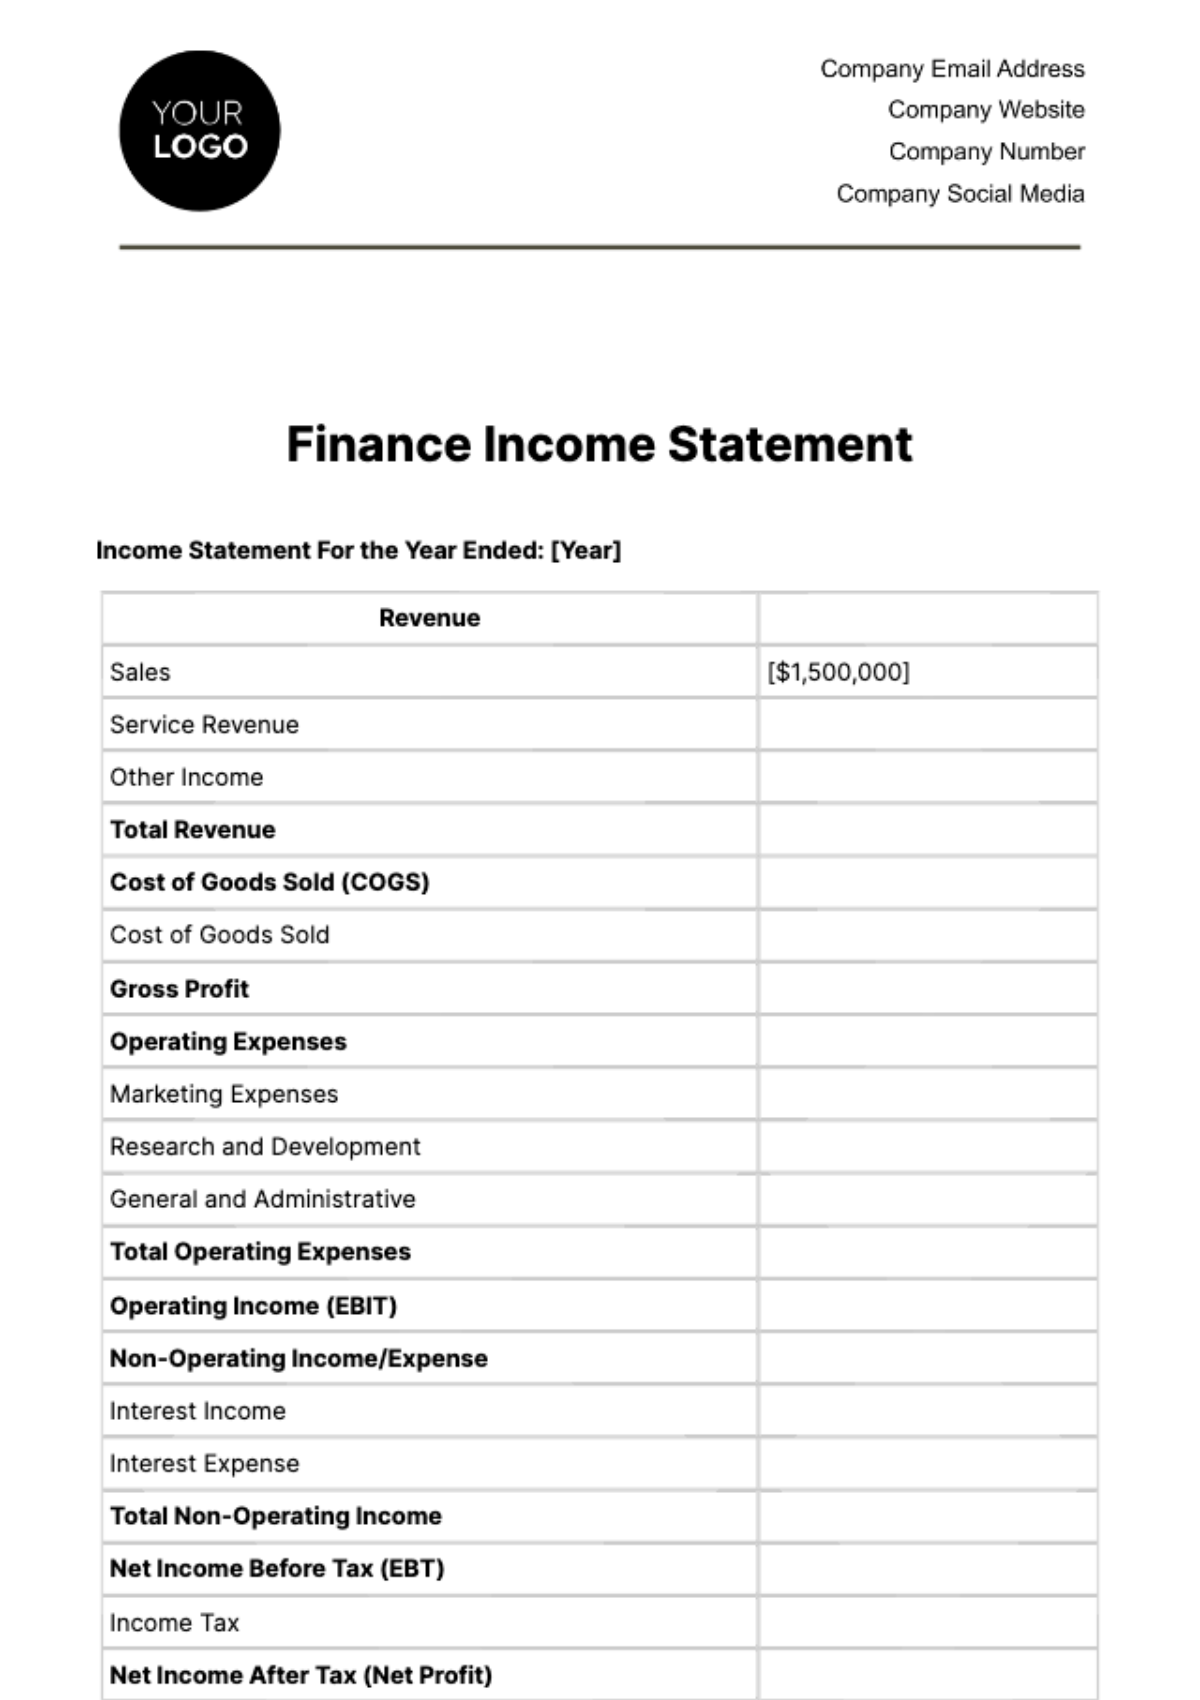 Finance Income Statement Template